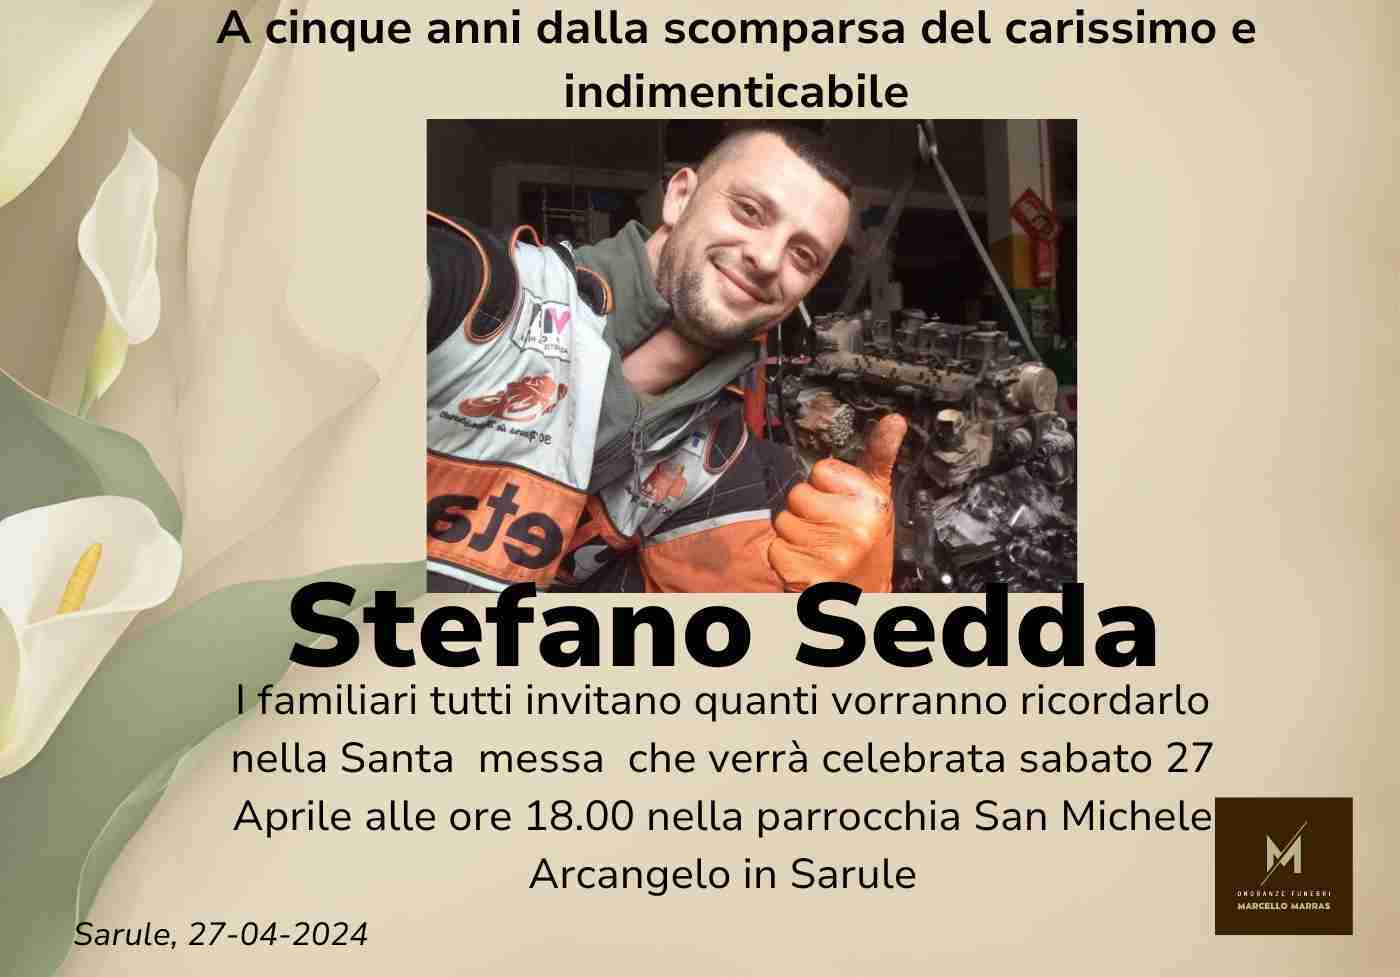 Stefano Sedda